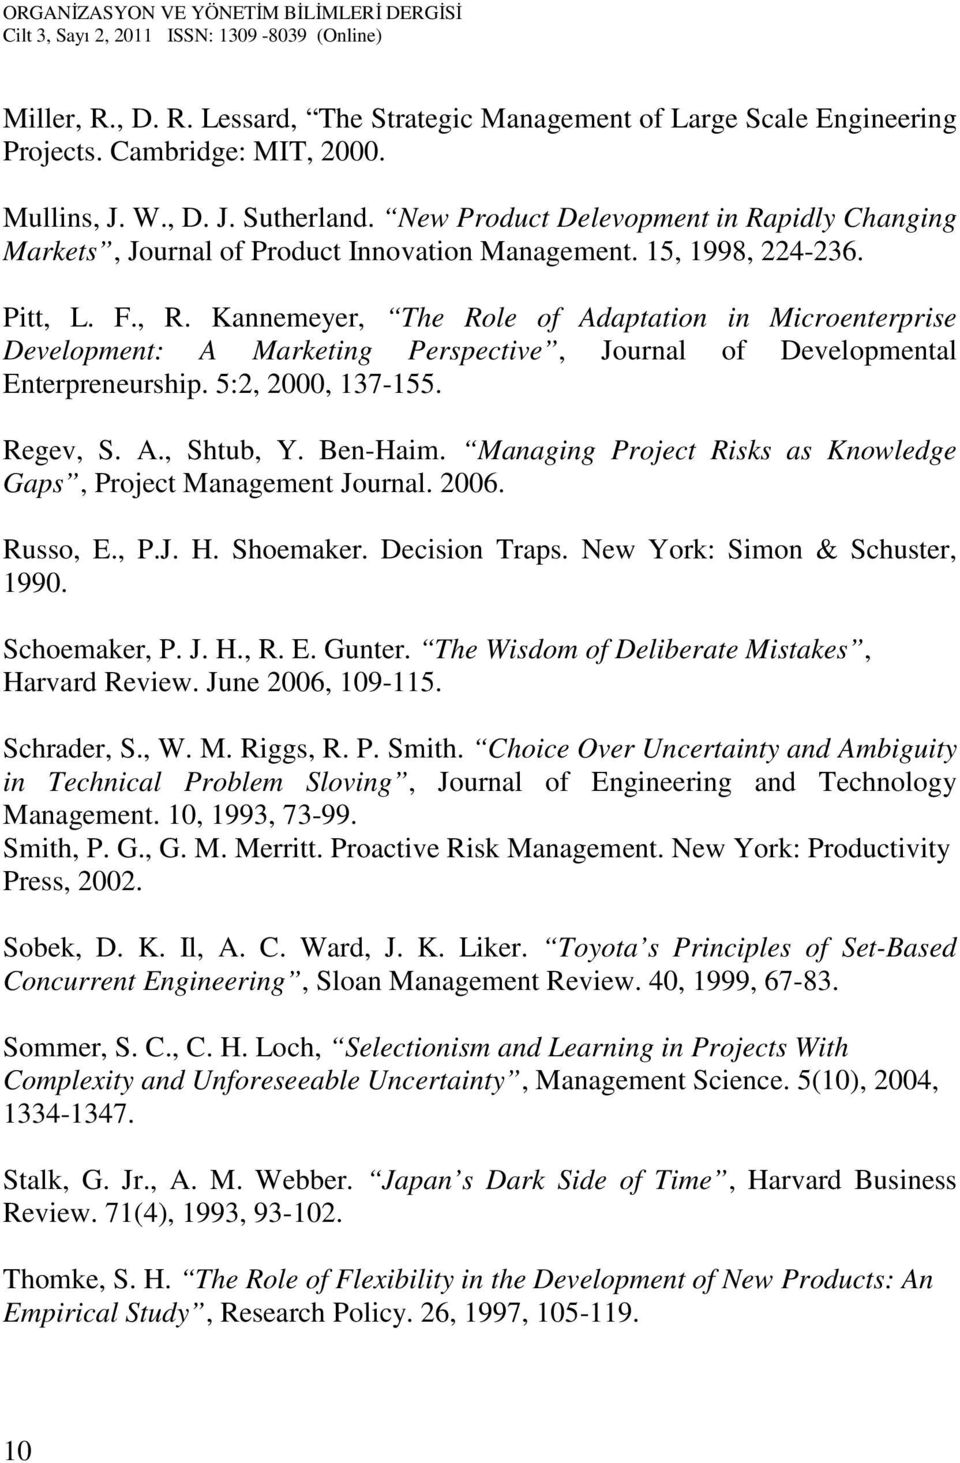 Kannemeyer, The Role of Adaptation in Microenterprise Development: A Marketing Perspective, Journal of Developmental Enterpreneurship. 5:2, 2000, 137-155. Regev, S. A., Shtub, Y. Ben-Haim.